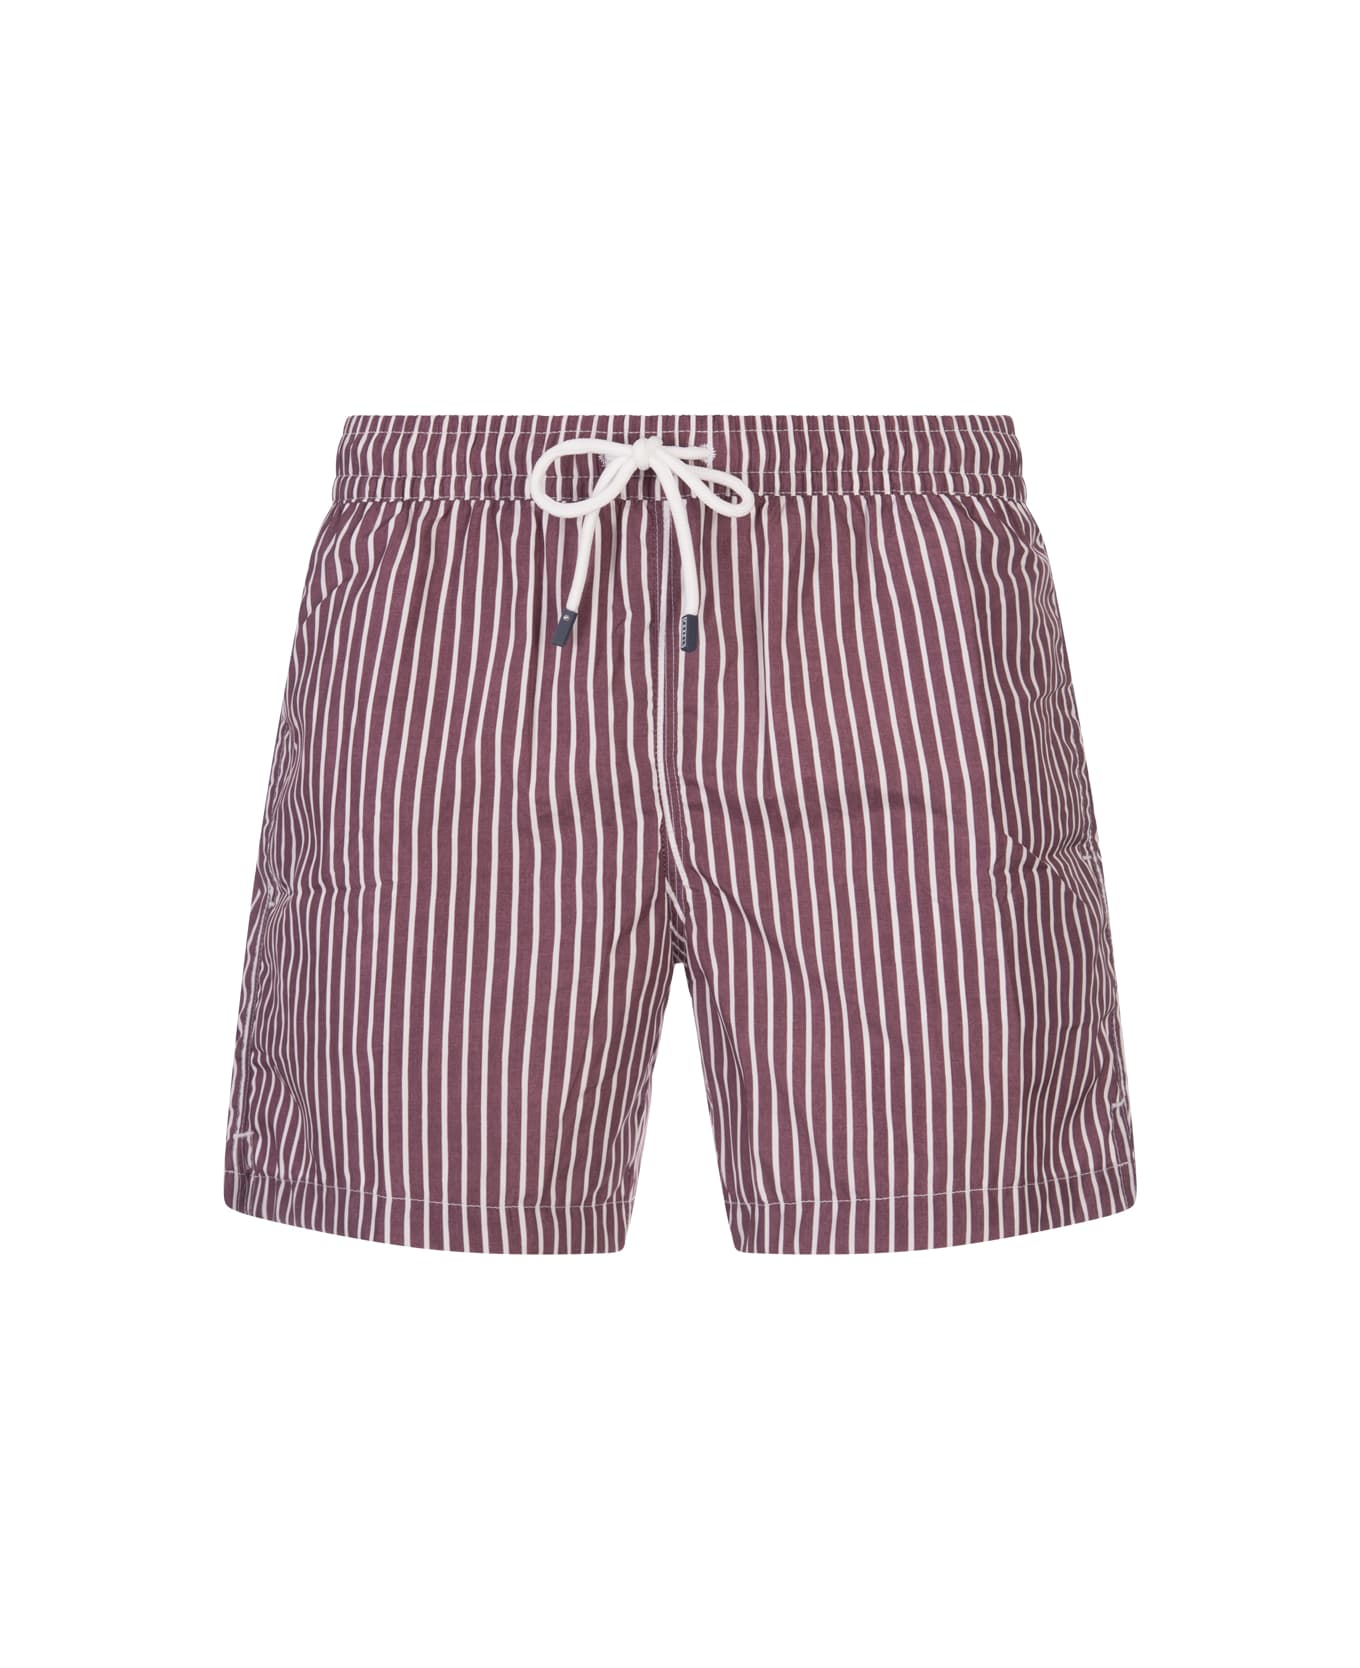 Fedeli Burgundy And White Striped Swim Shorts - Red